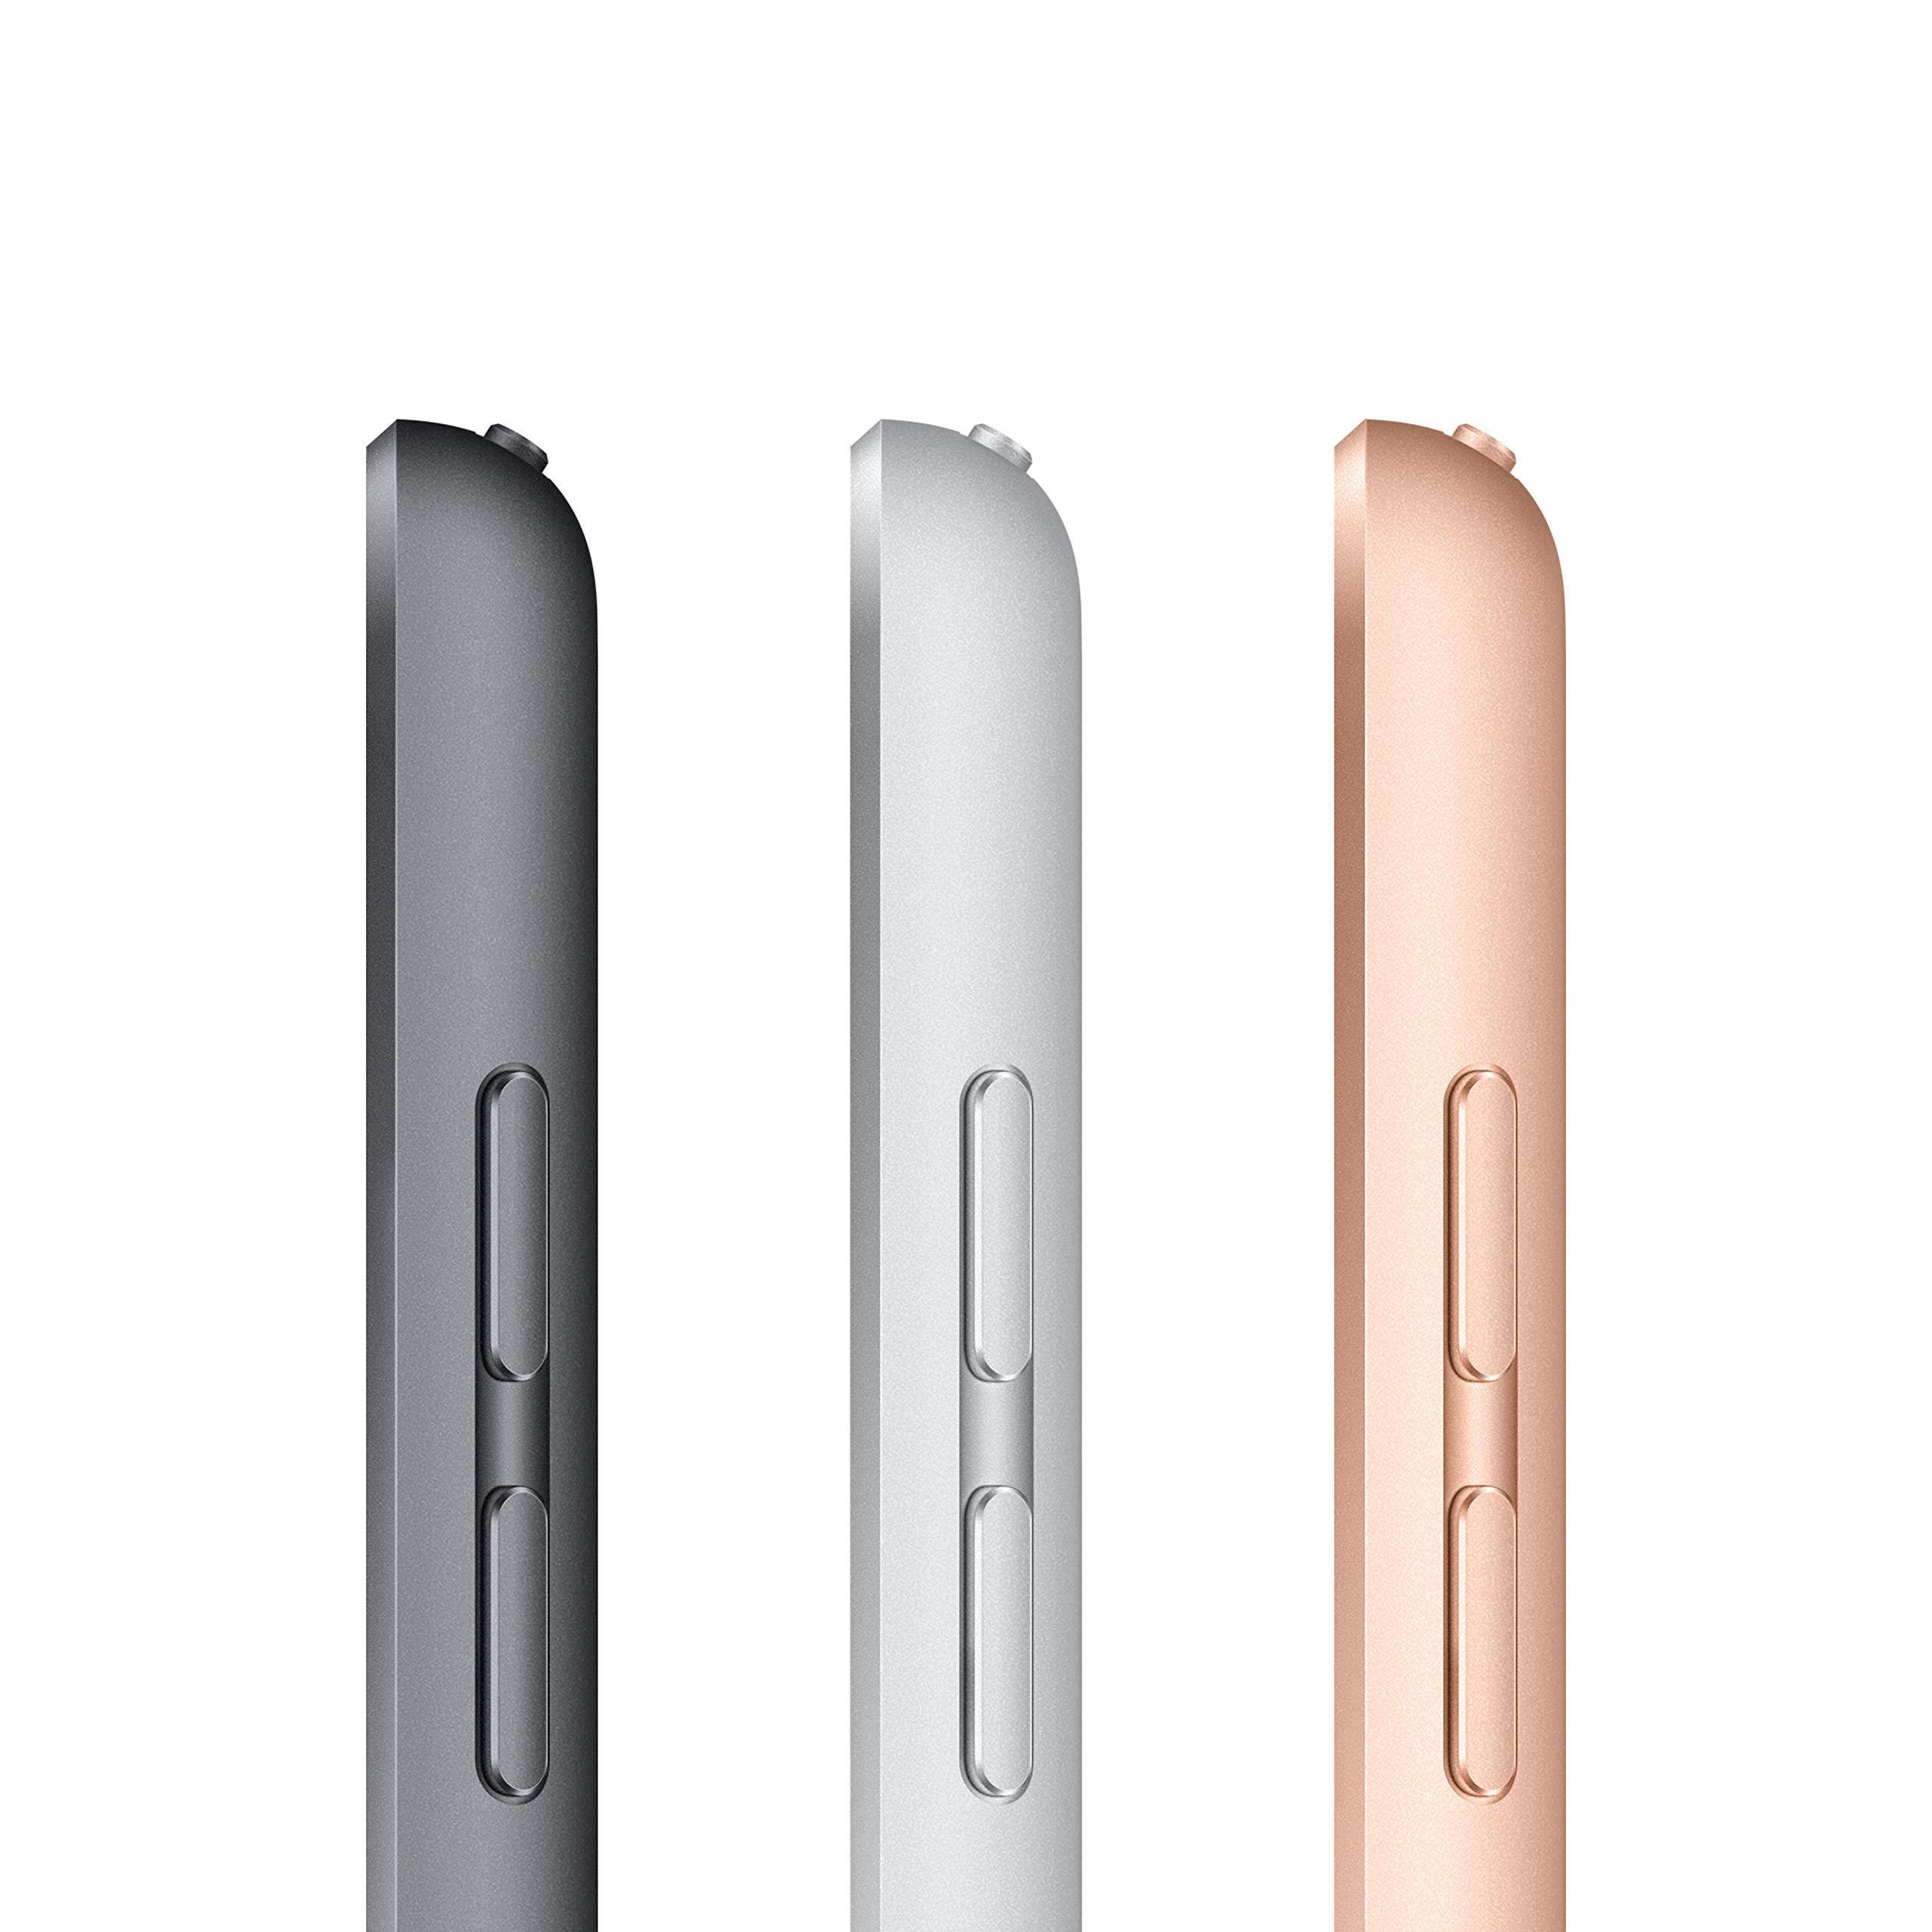 Apple 2020 iPad (10.2-inch, Wi-Fi, 32GB) - Gold (8th Generation)